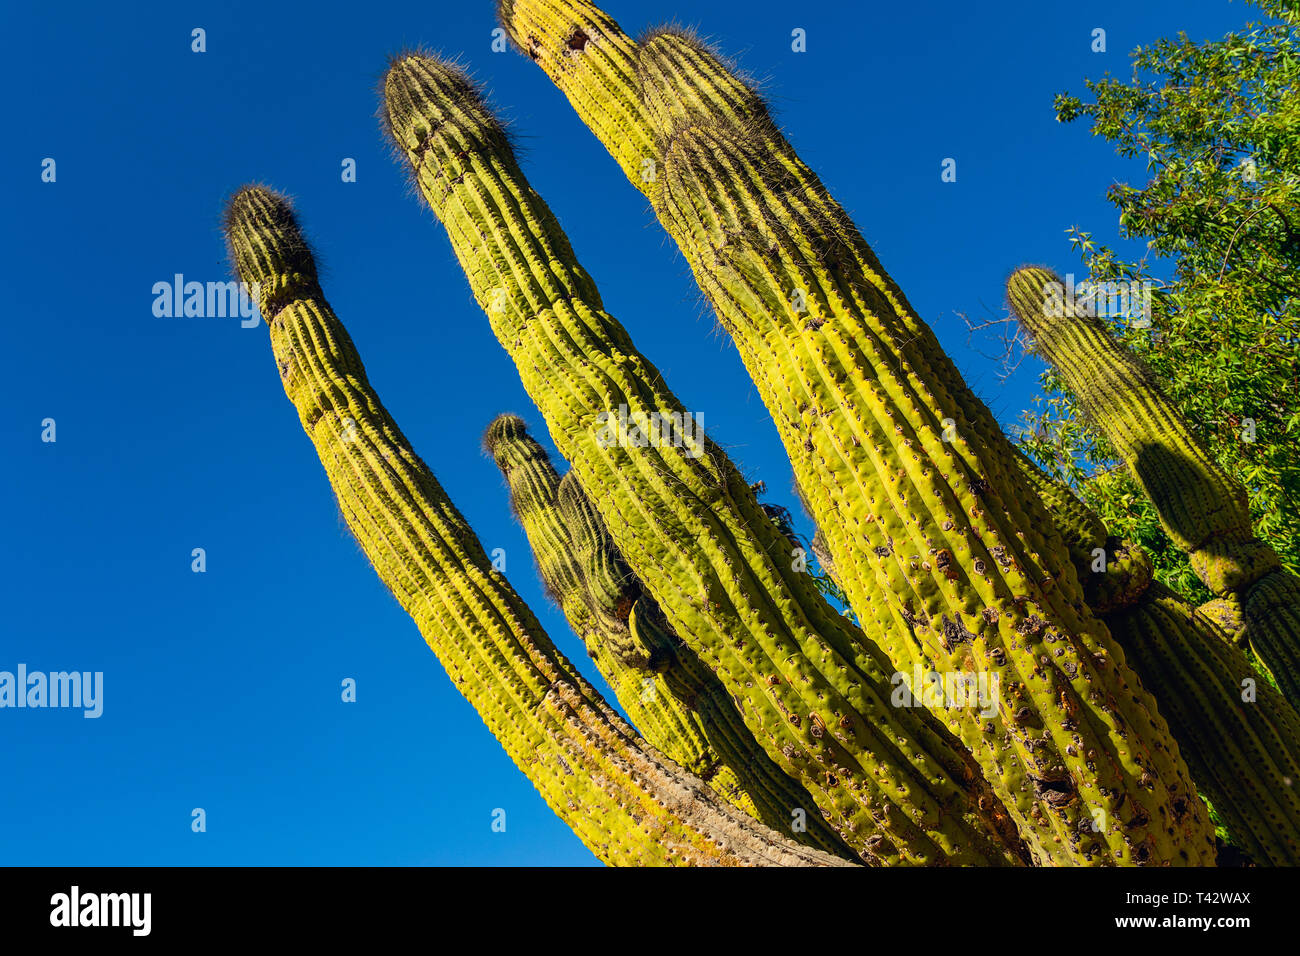 Cactus vicino, cielo blu in background. Wrigley Botanical Gardens & Memorial sull isola Catalina, California Foto Stock